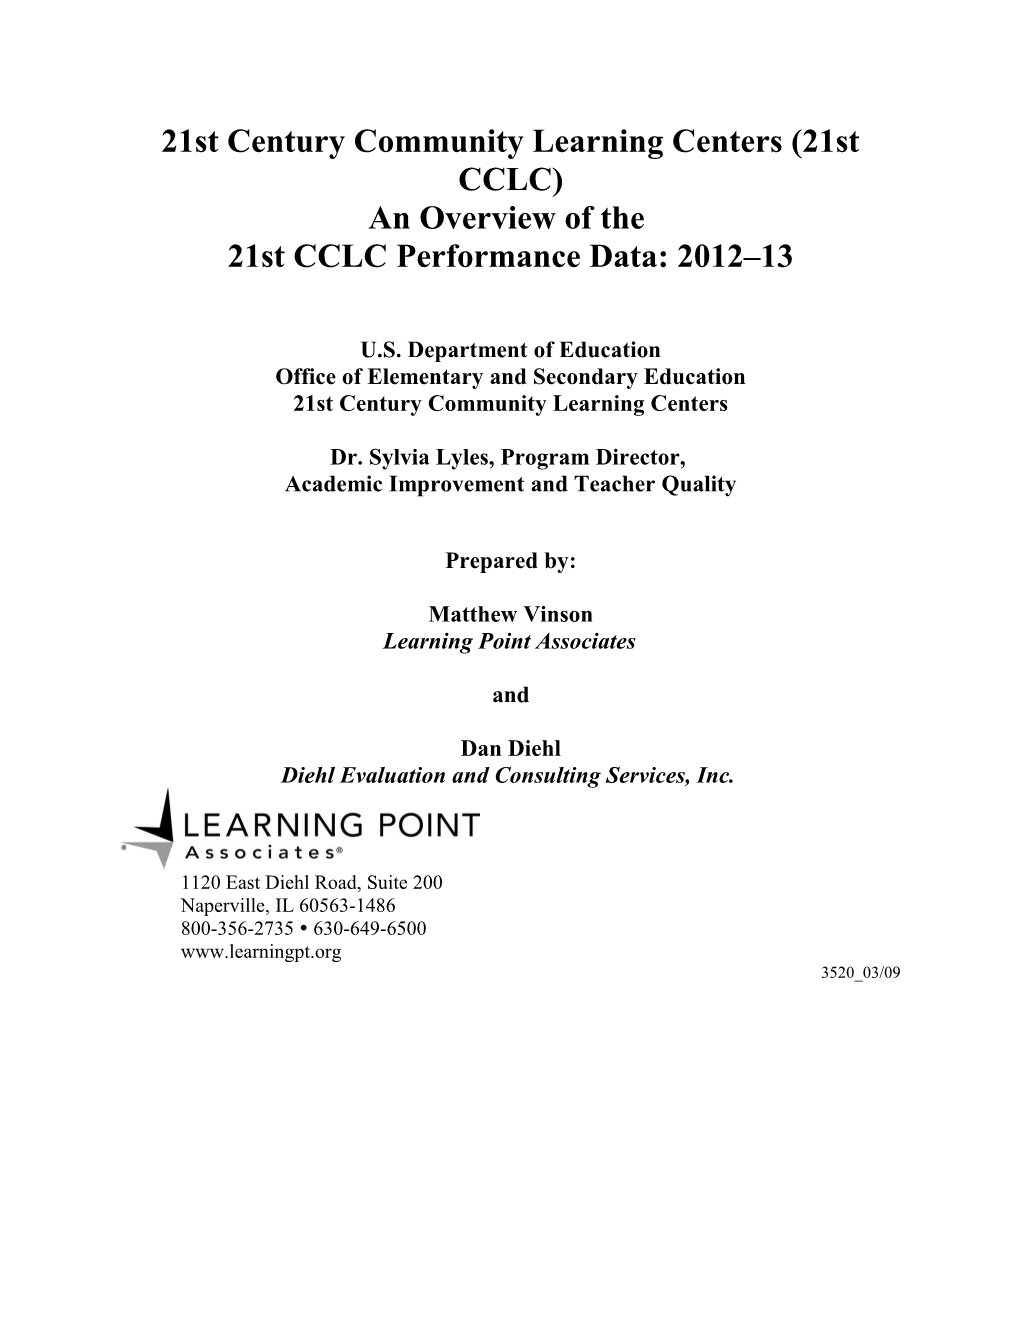 21St CCLC Performance Data: 2012 13 (Msword)